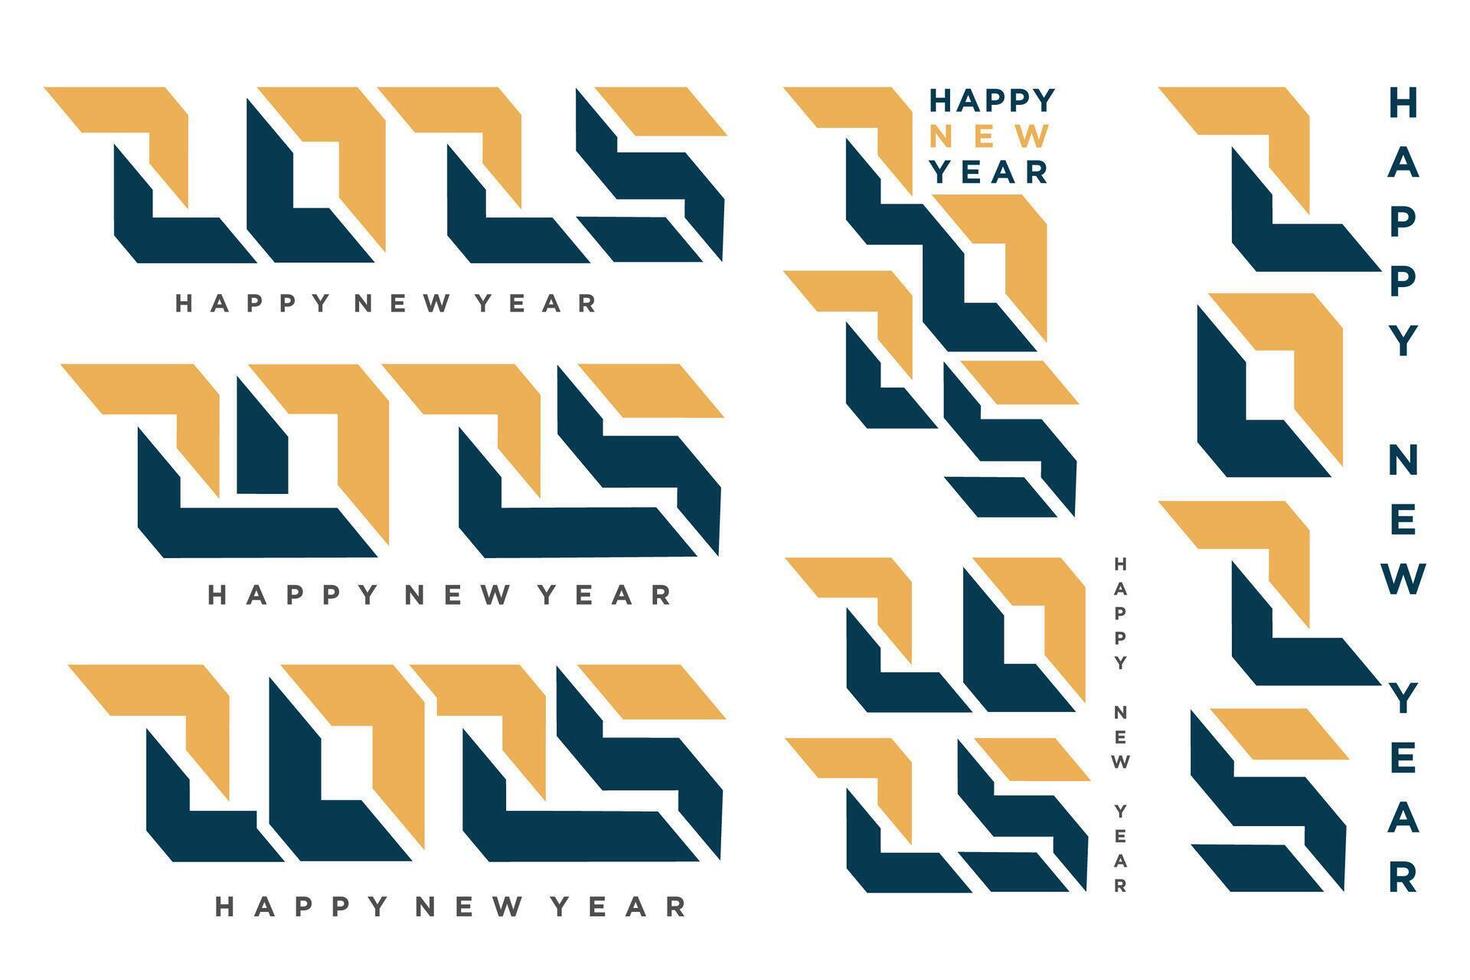 Big Set of 2025 Happy New Year logo text design. 2025 number design template. Vector illustration